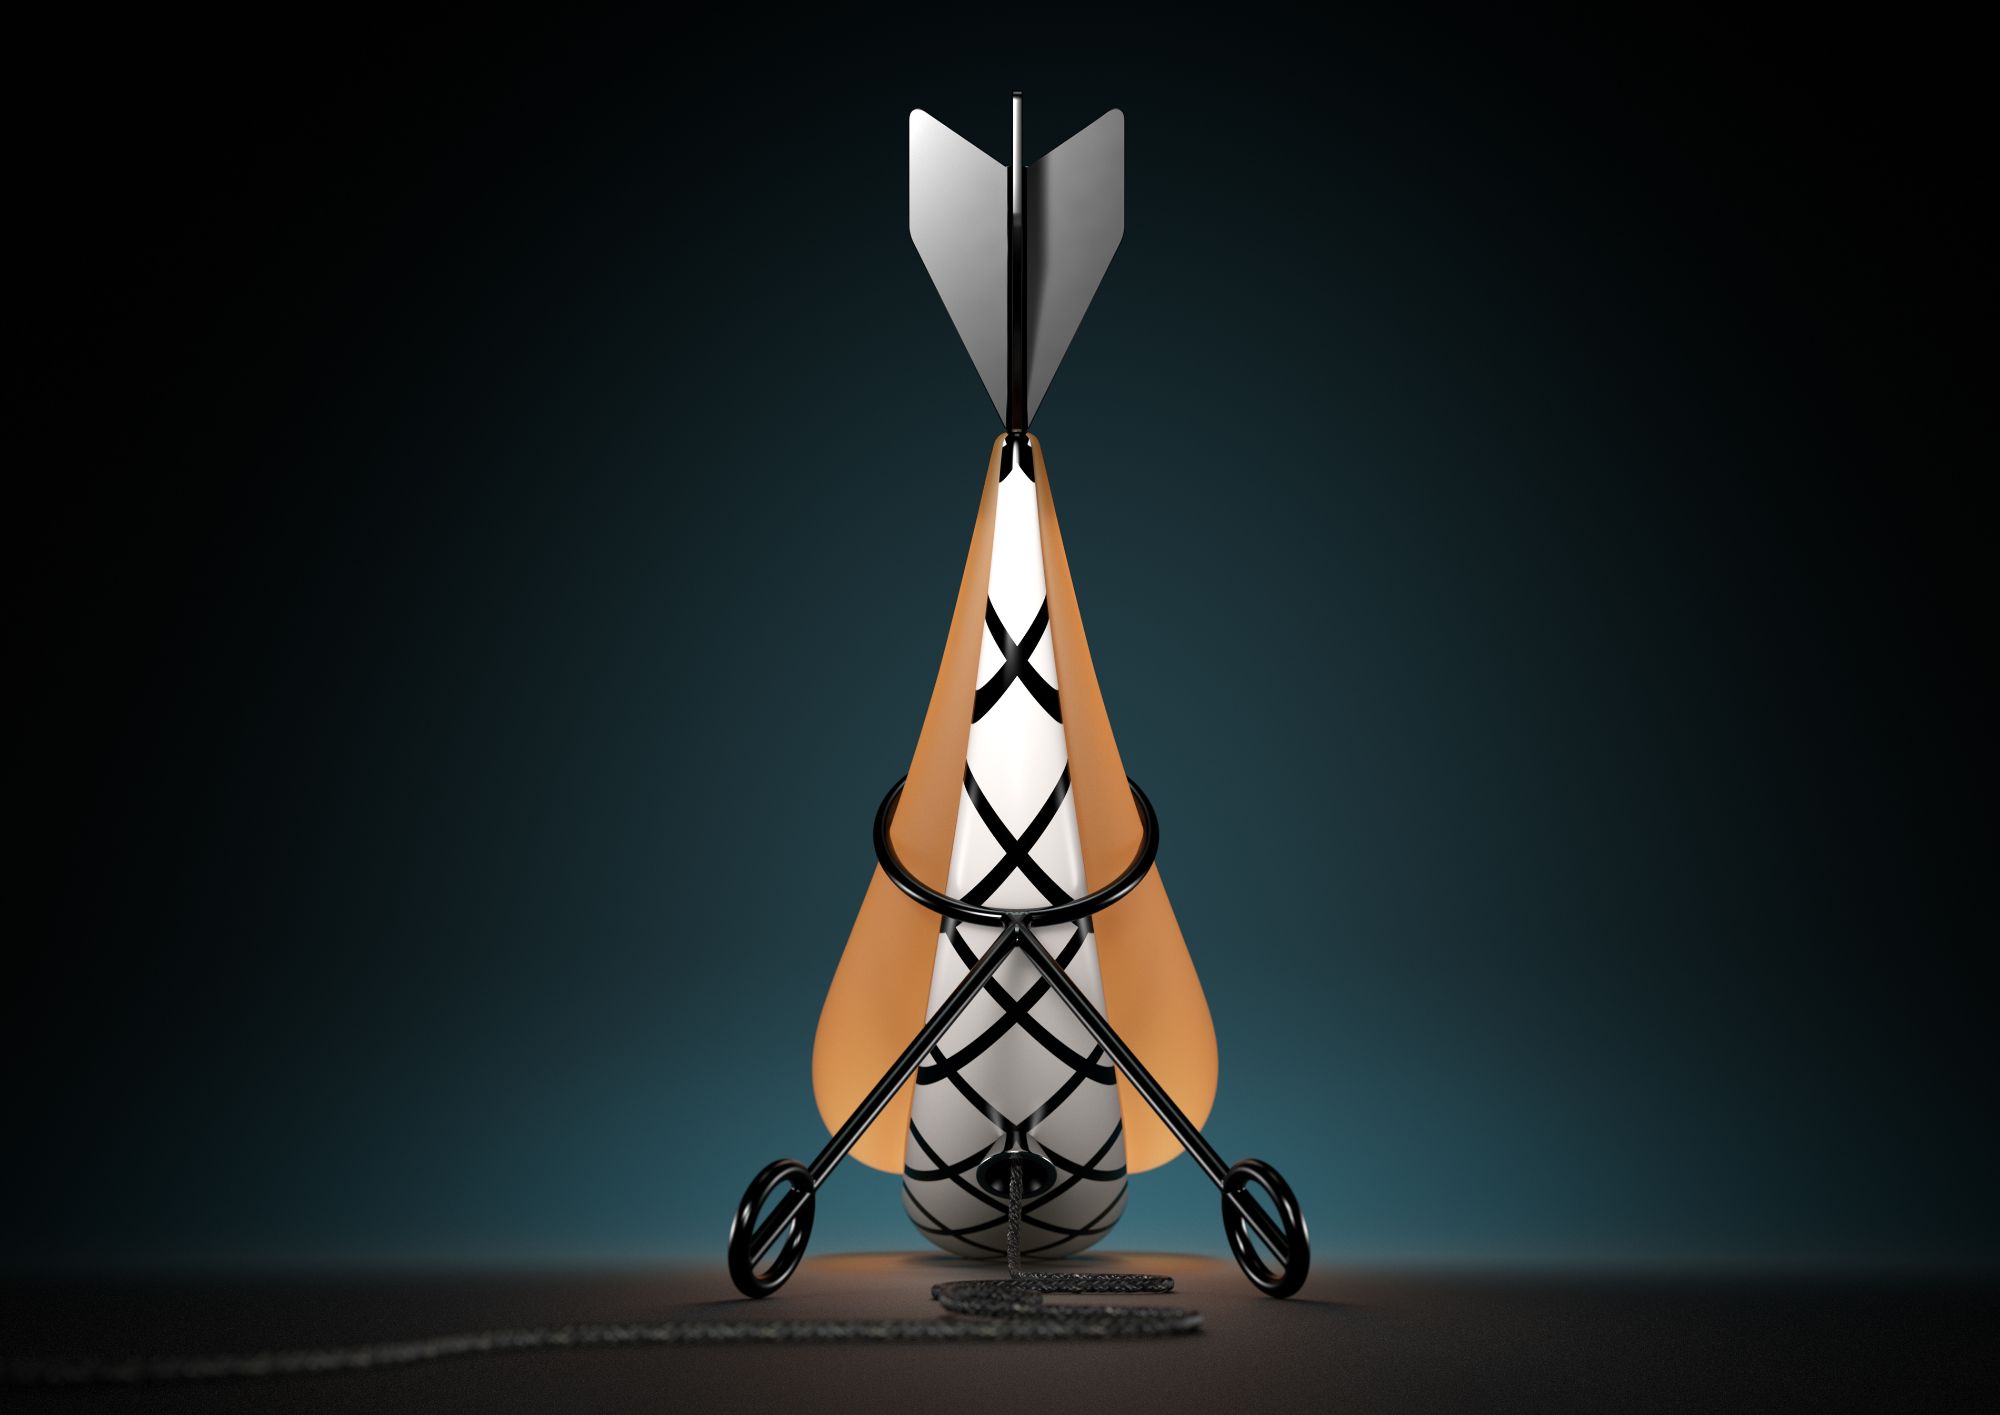 the Namatob vigil Lamp